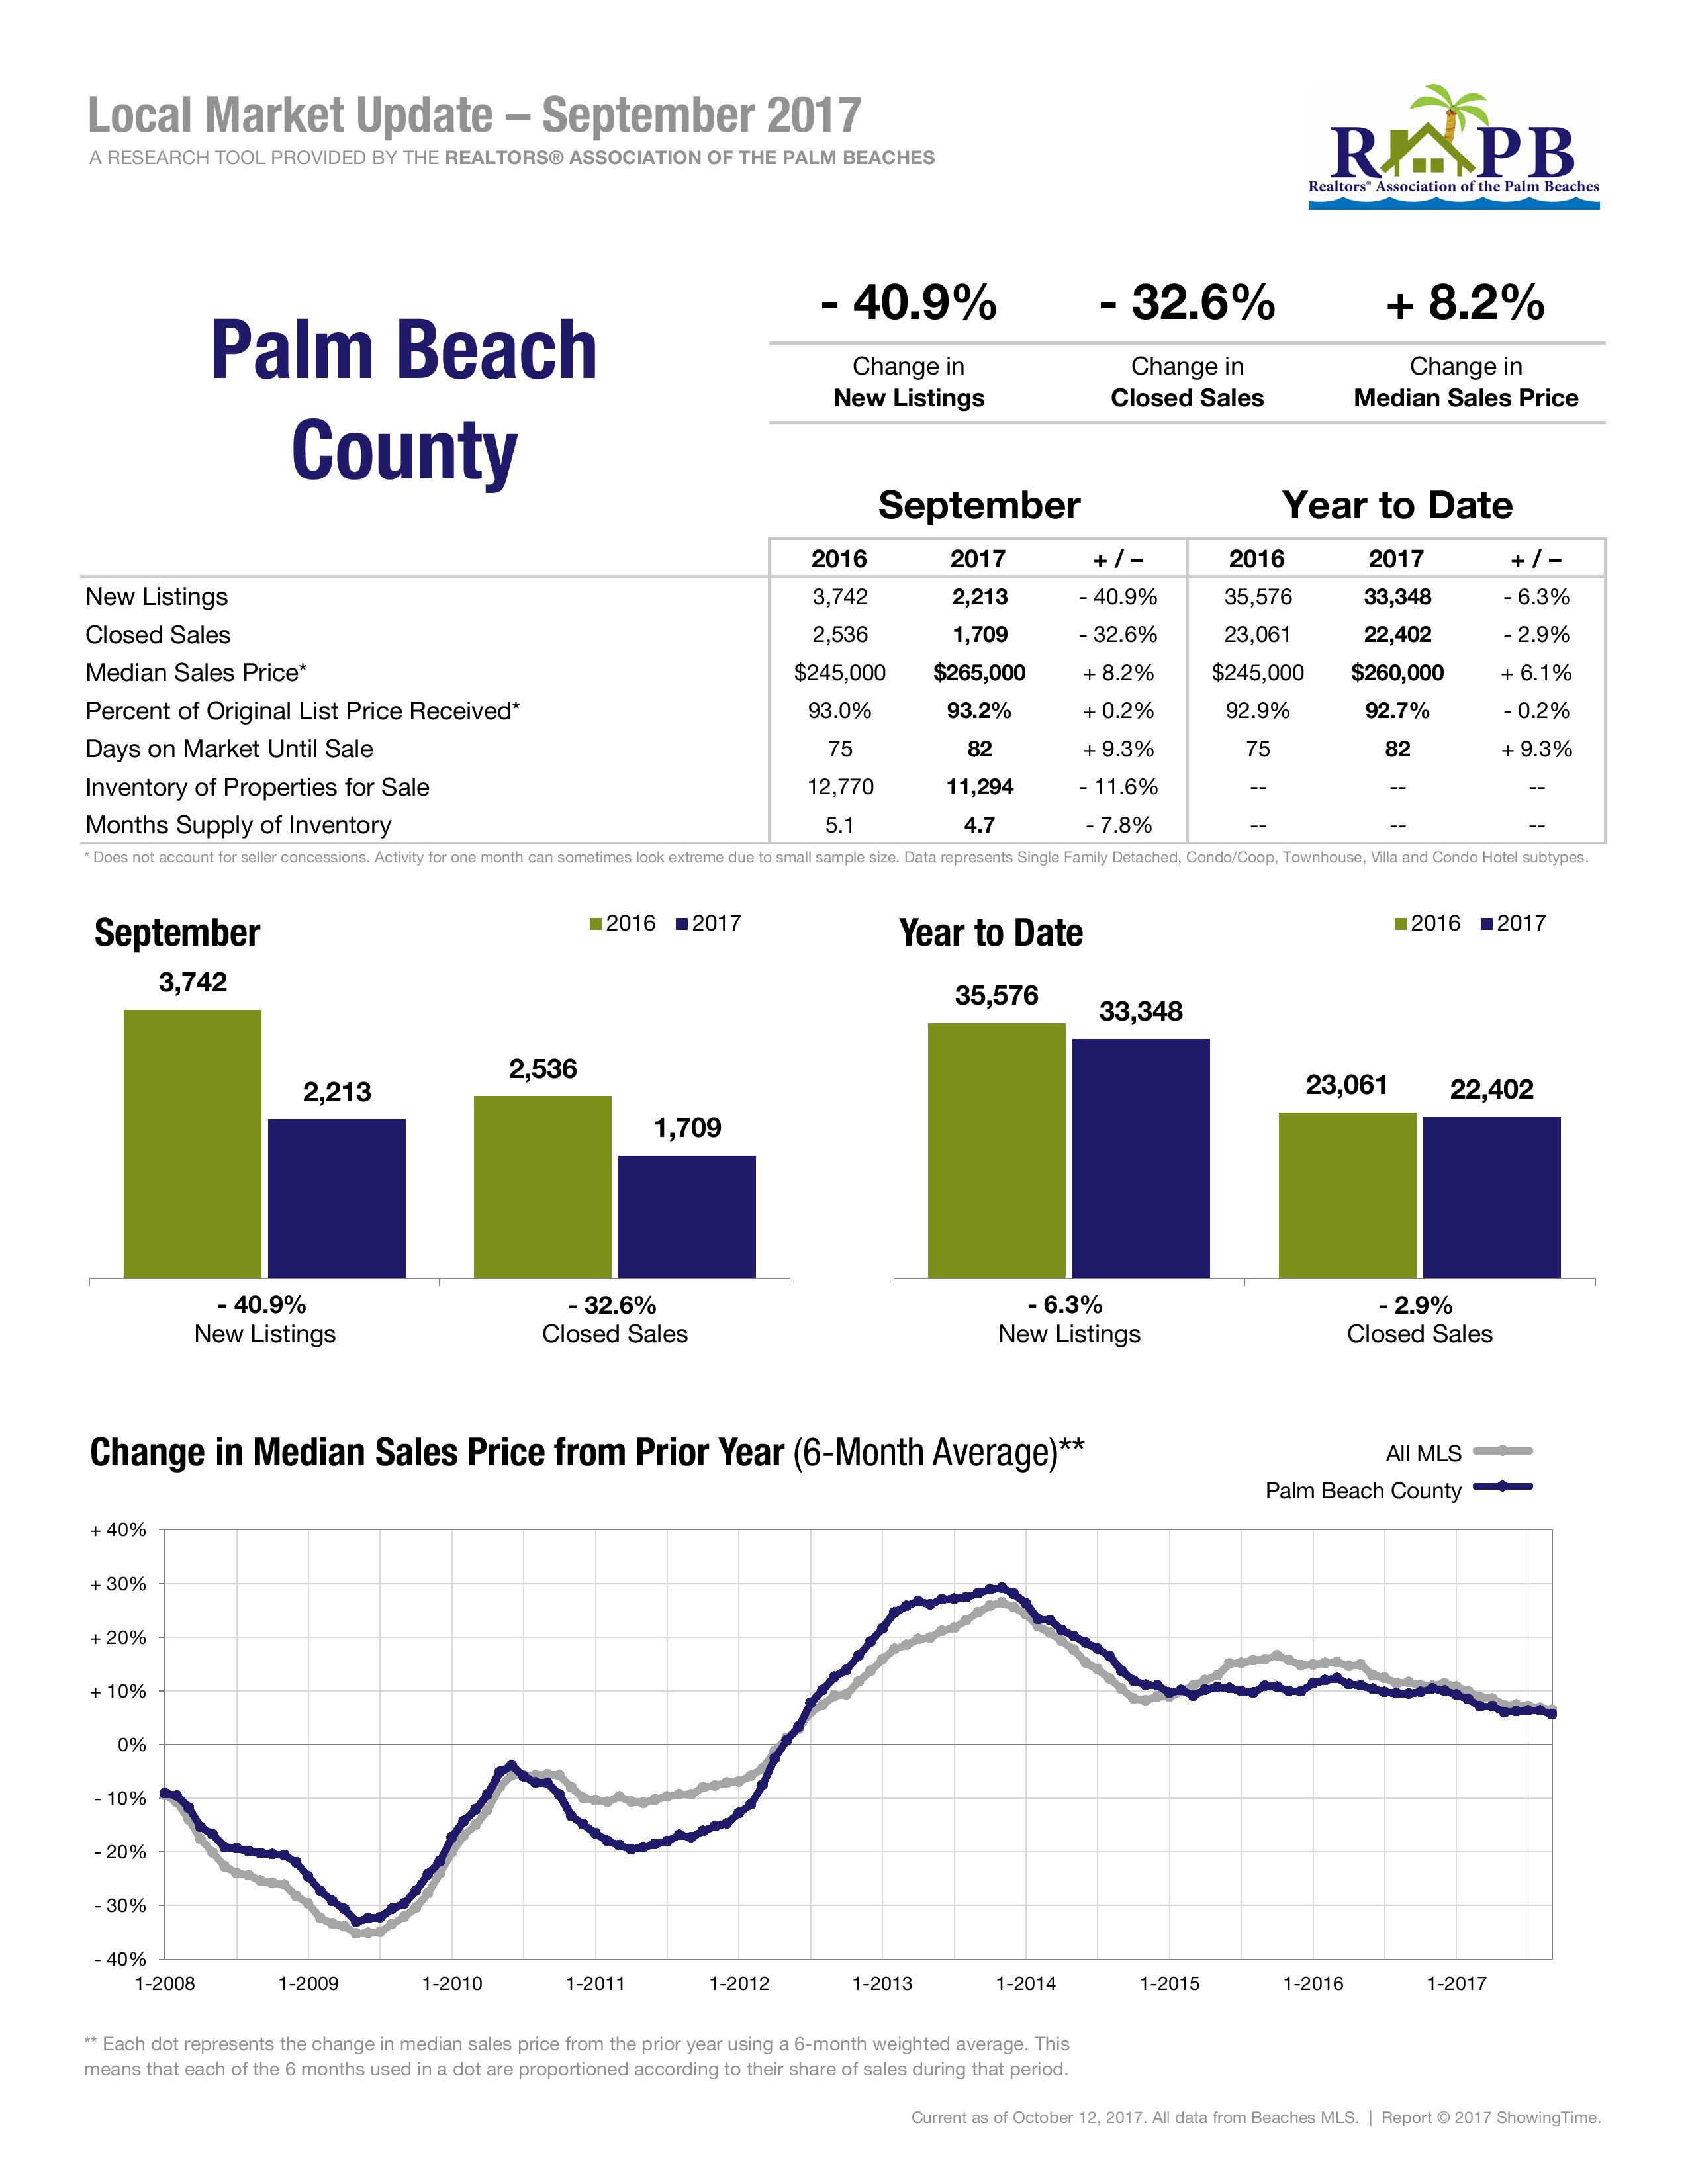 Palm Beach County Statistics for September 2017